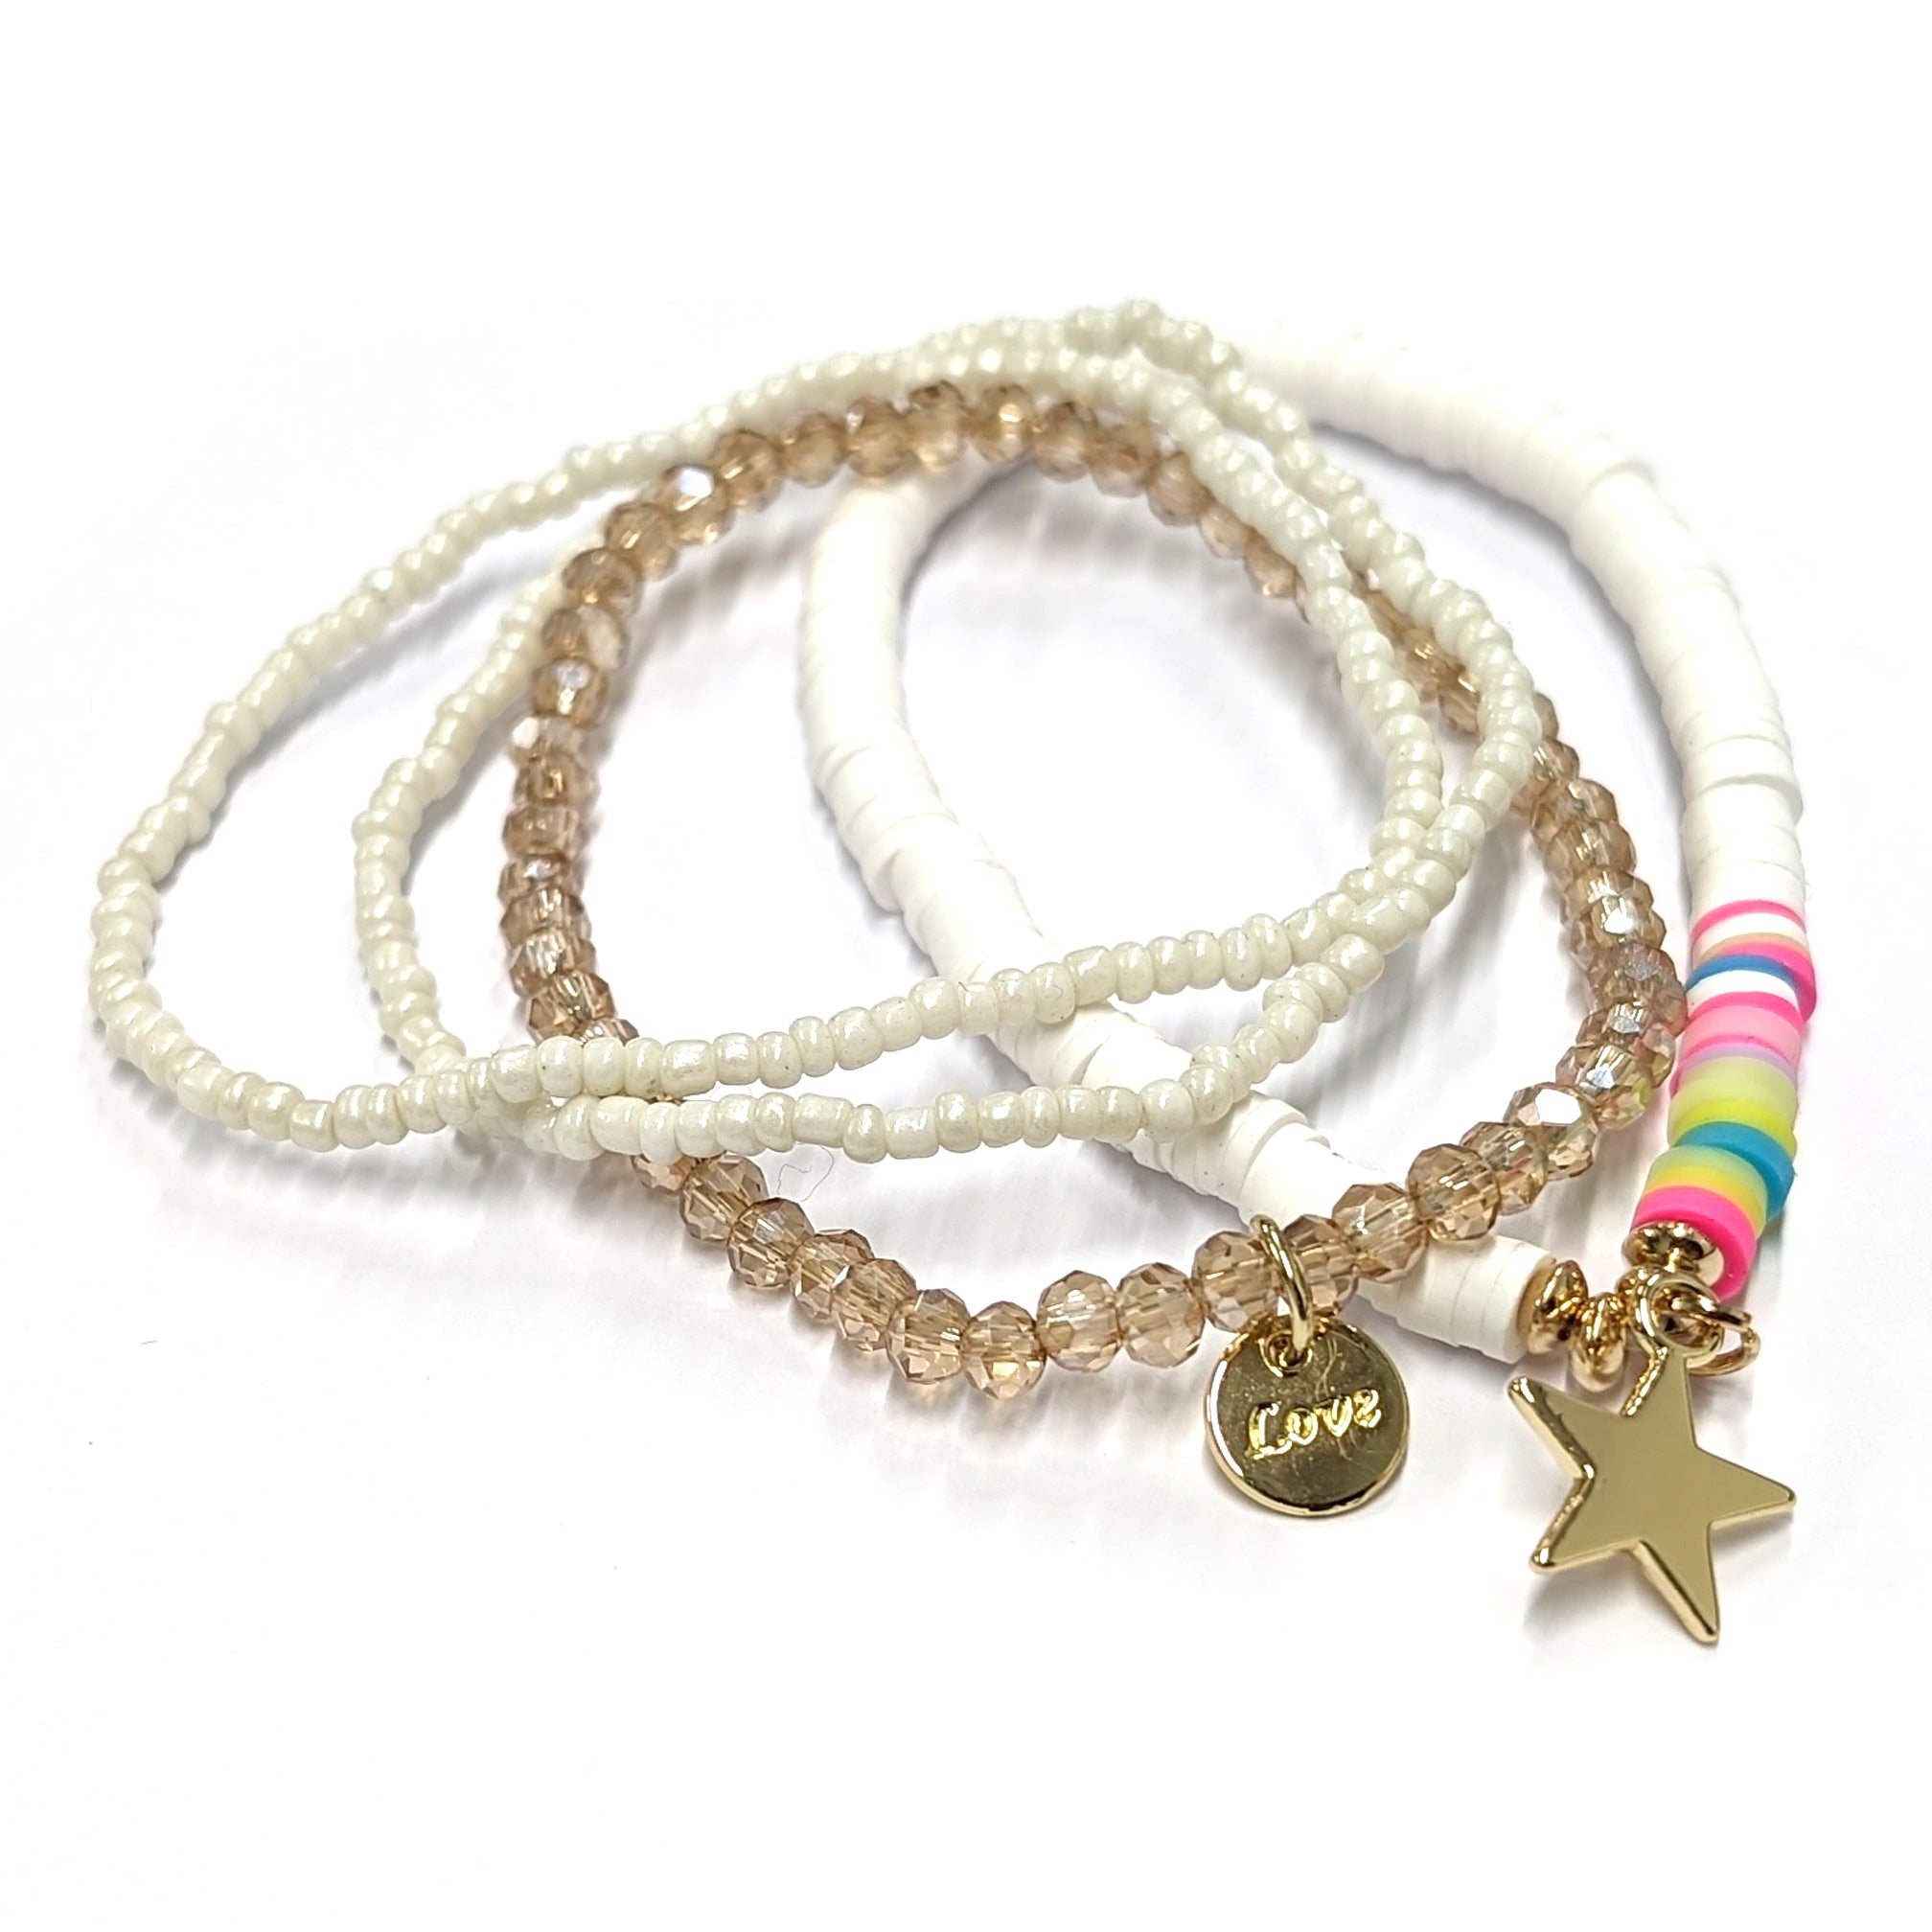 'You Are A Star' Bracelet Set - White